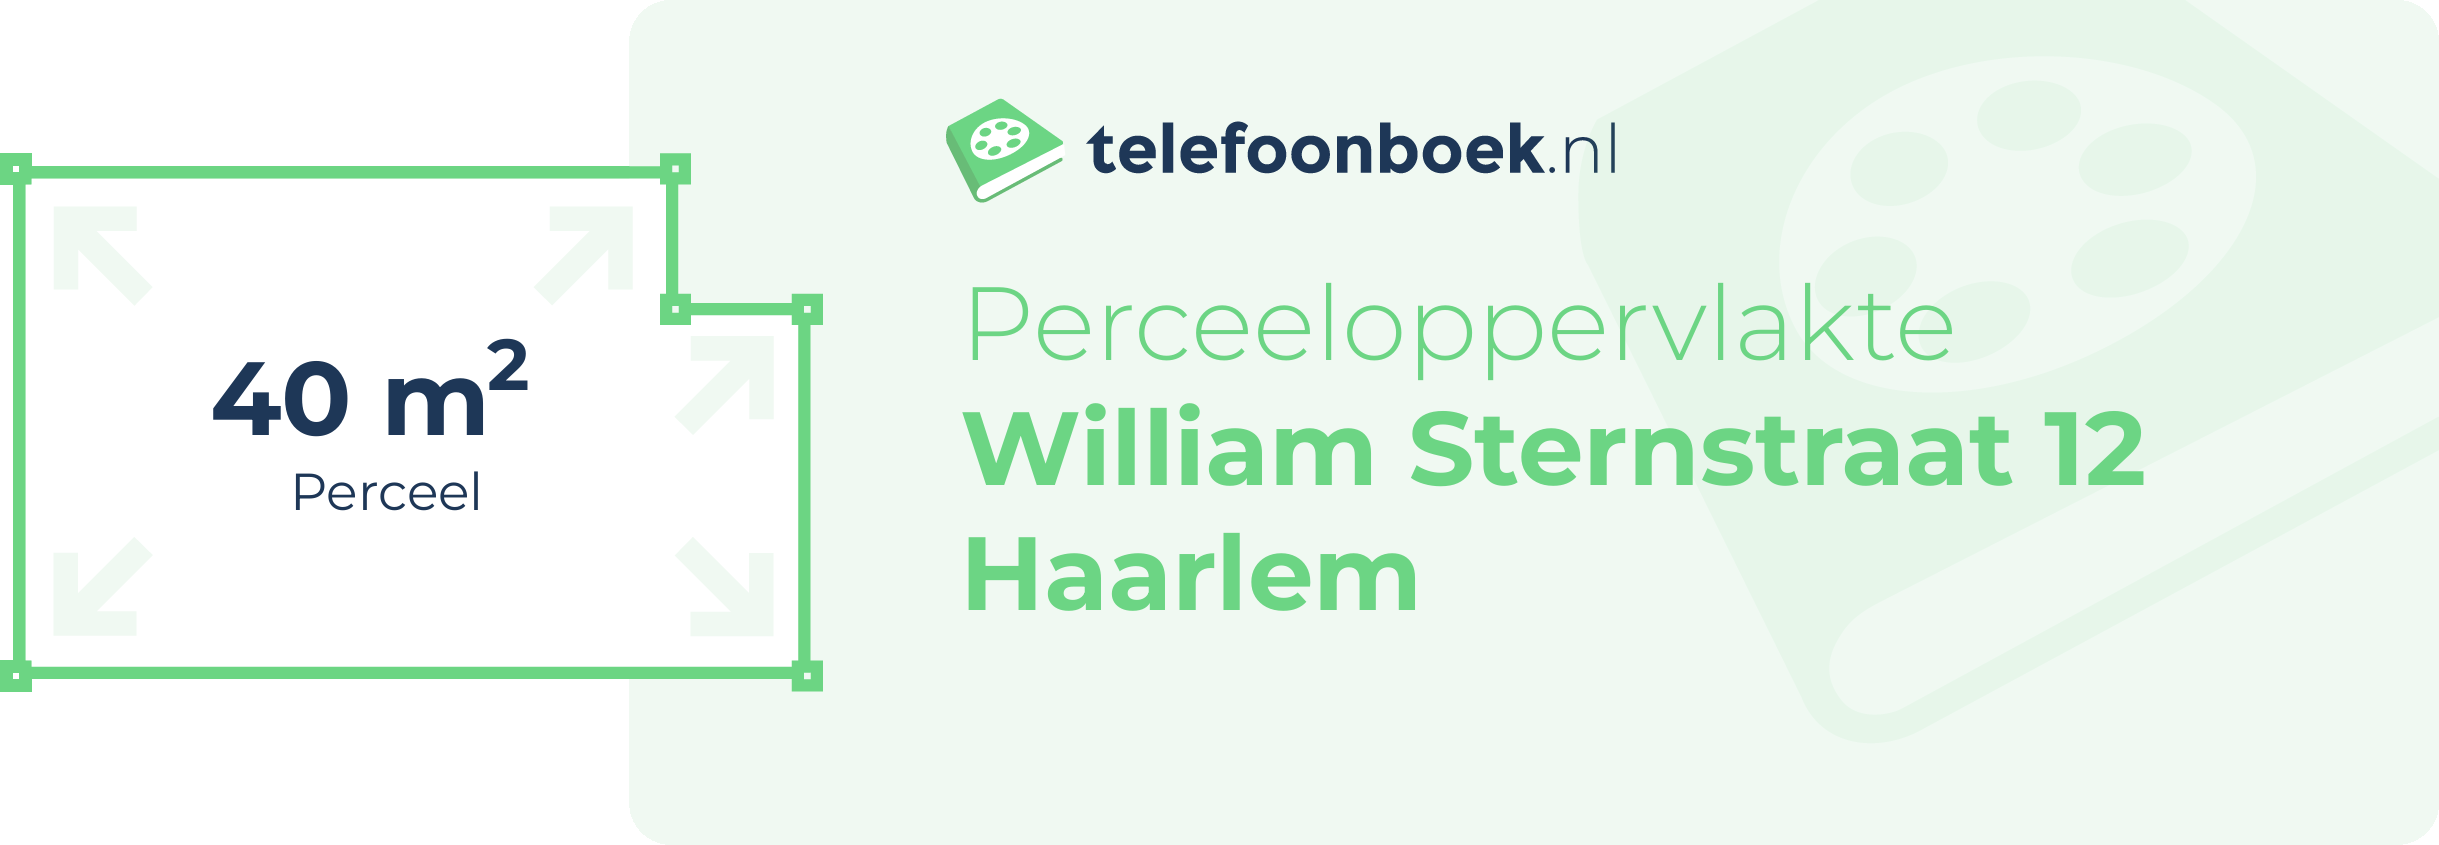 Perceeloppervlakte William Sternstraat 12 Haarlem